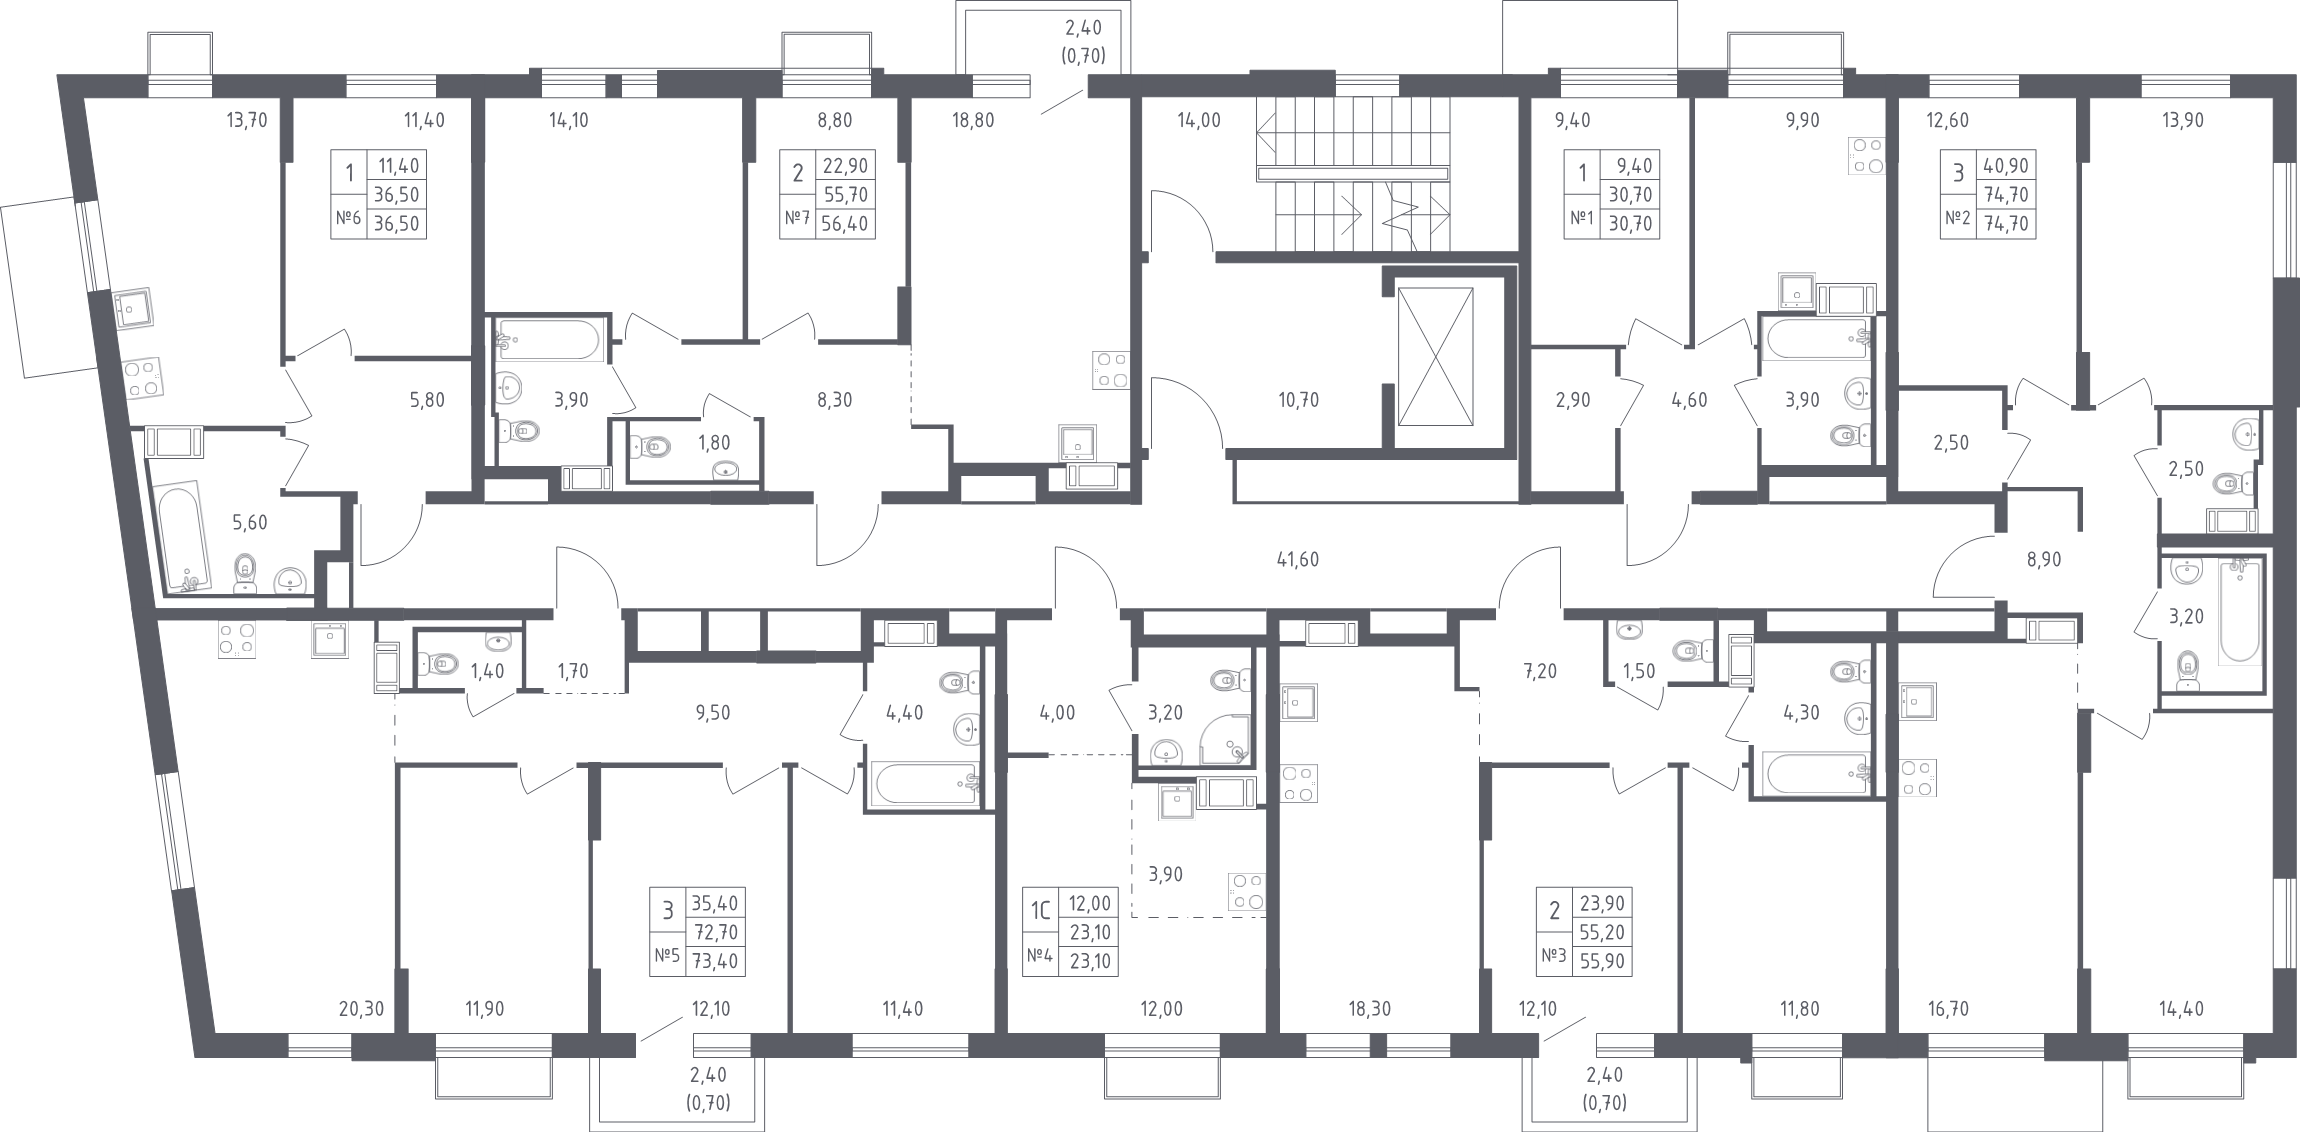 4-комнатная (Евро) квартира, 74.7 м² - планировка этажа